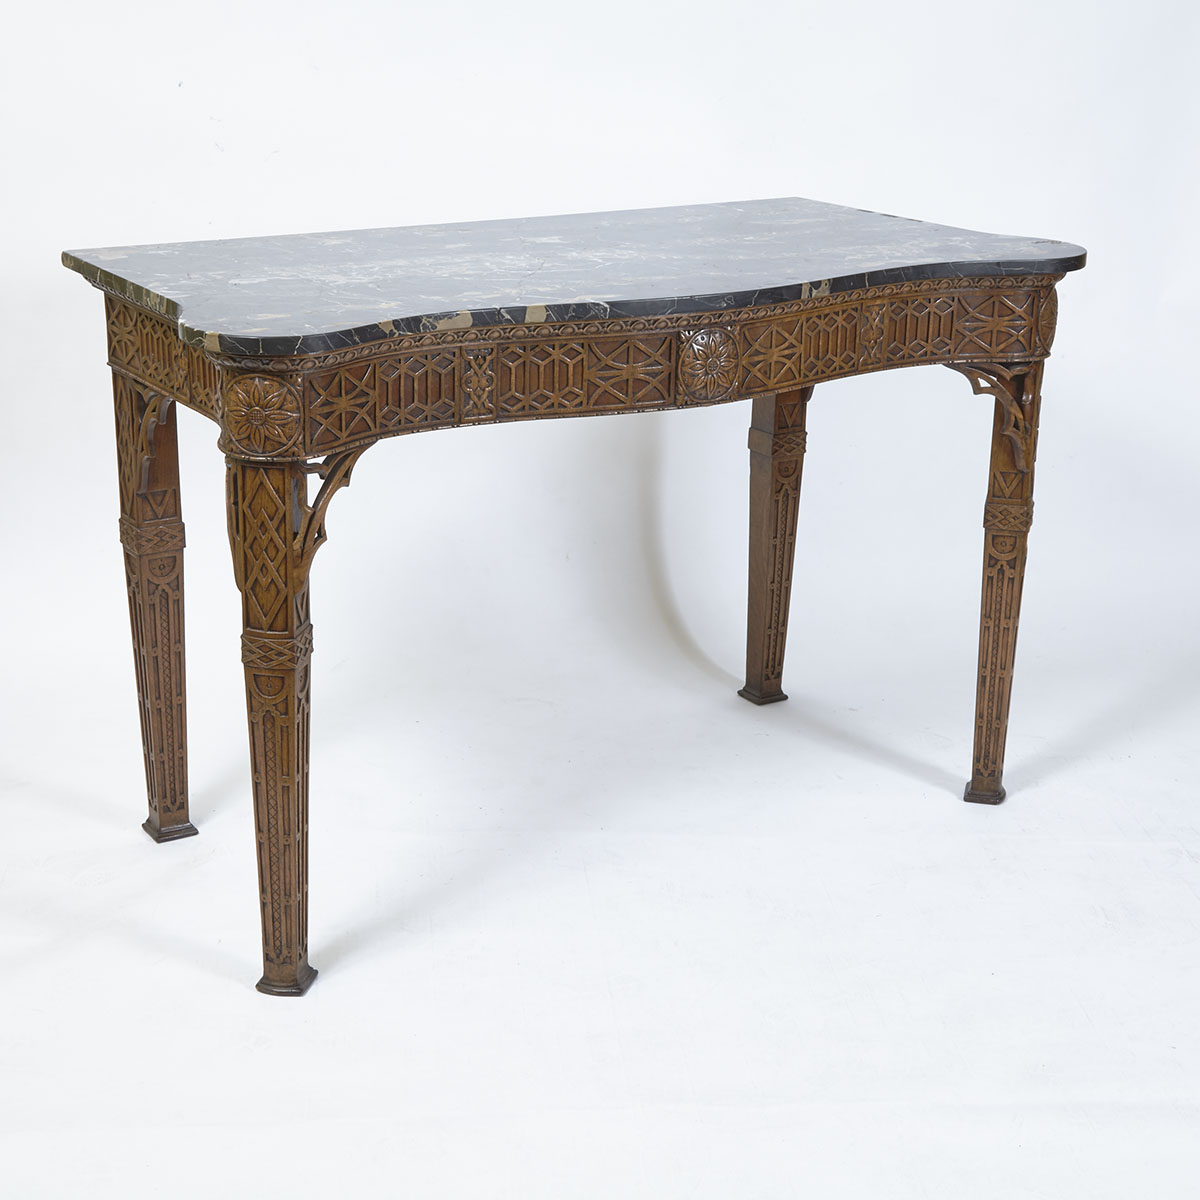 Italianate Walnut Fretwork Carved Console Table, 19th century